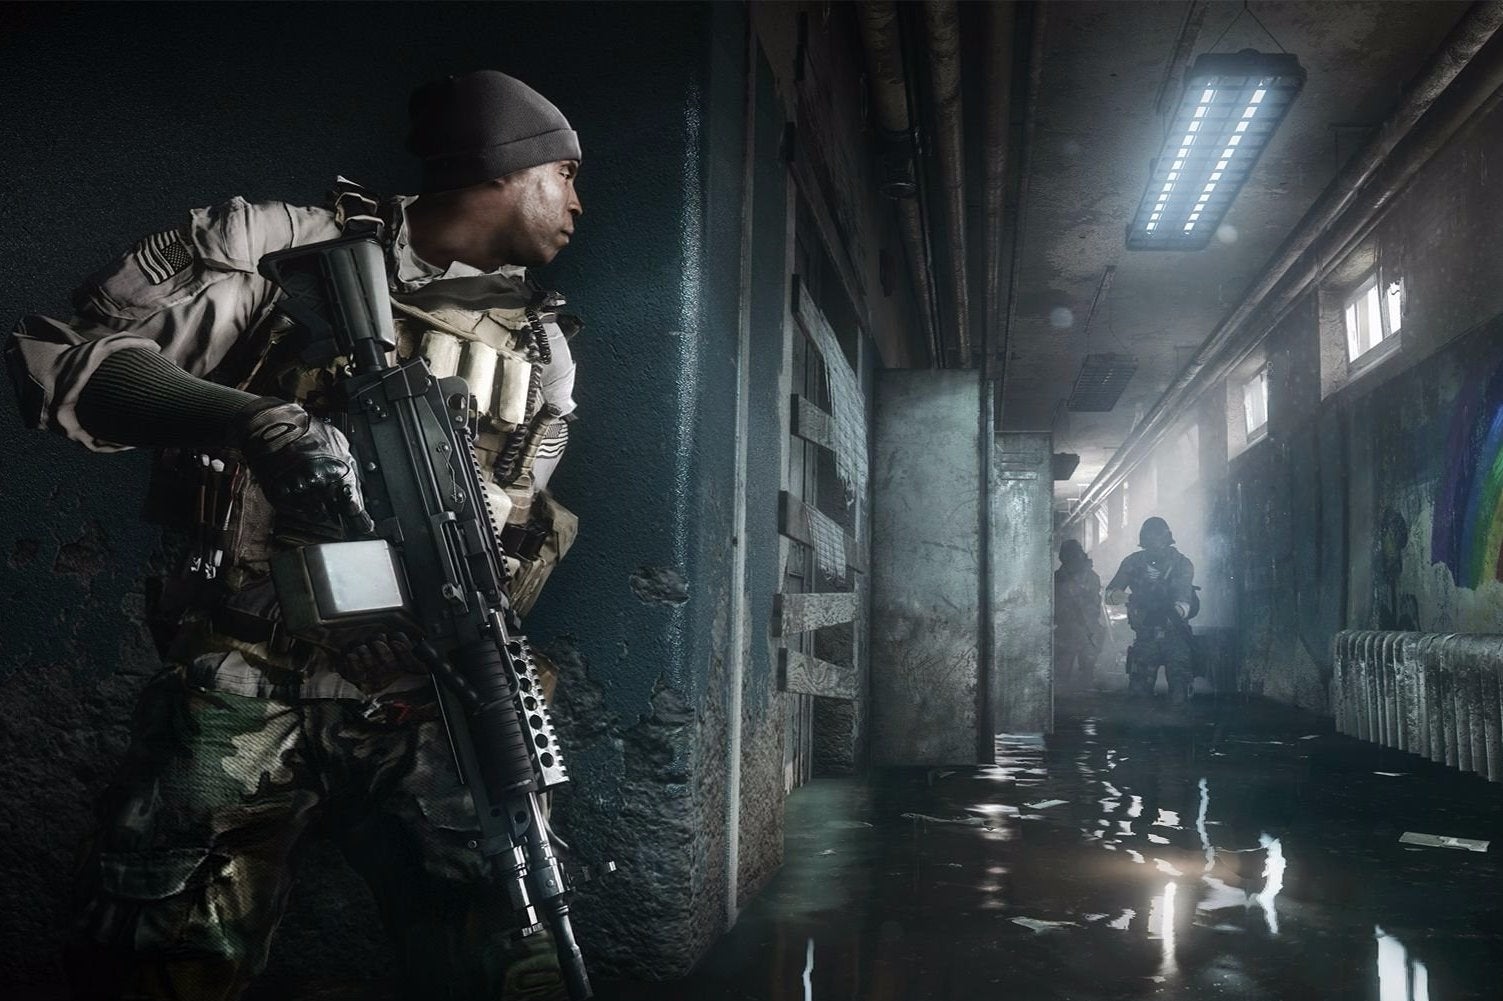 Immagine di Battlefield 4, l'espansione Naval Strike è scaricabile gratuitamente su Xbox One